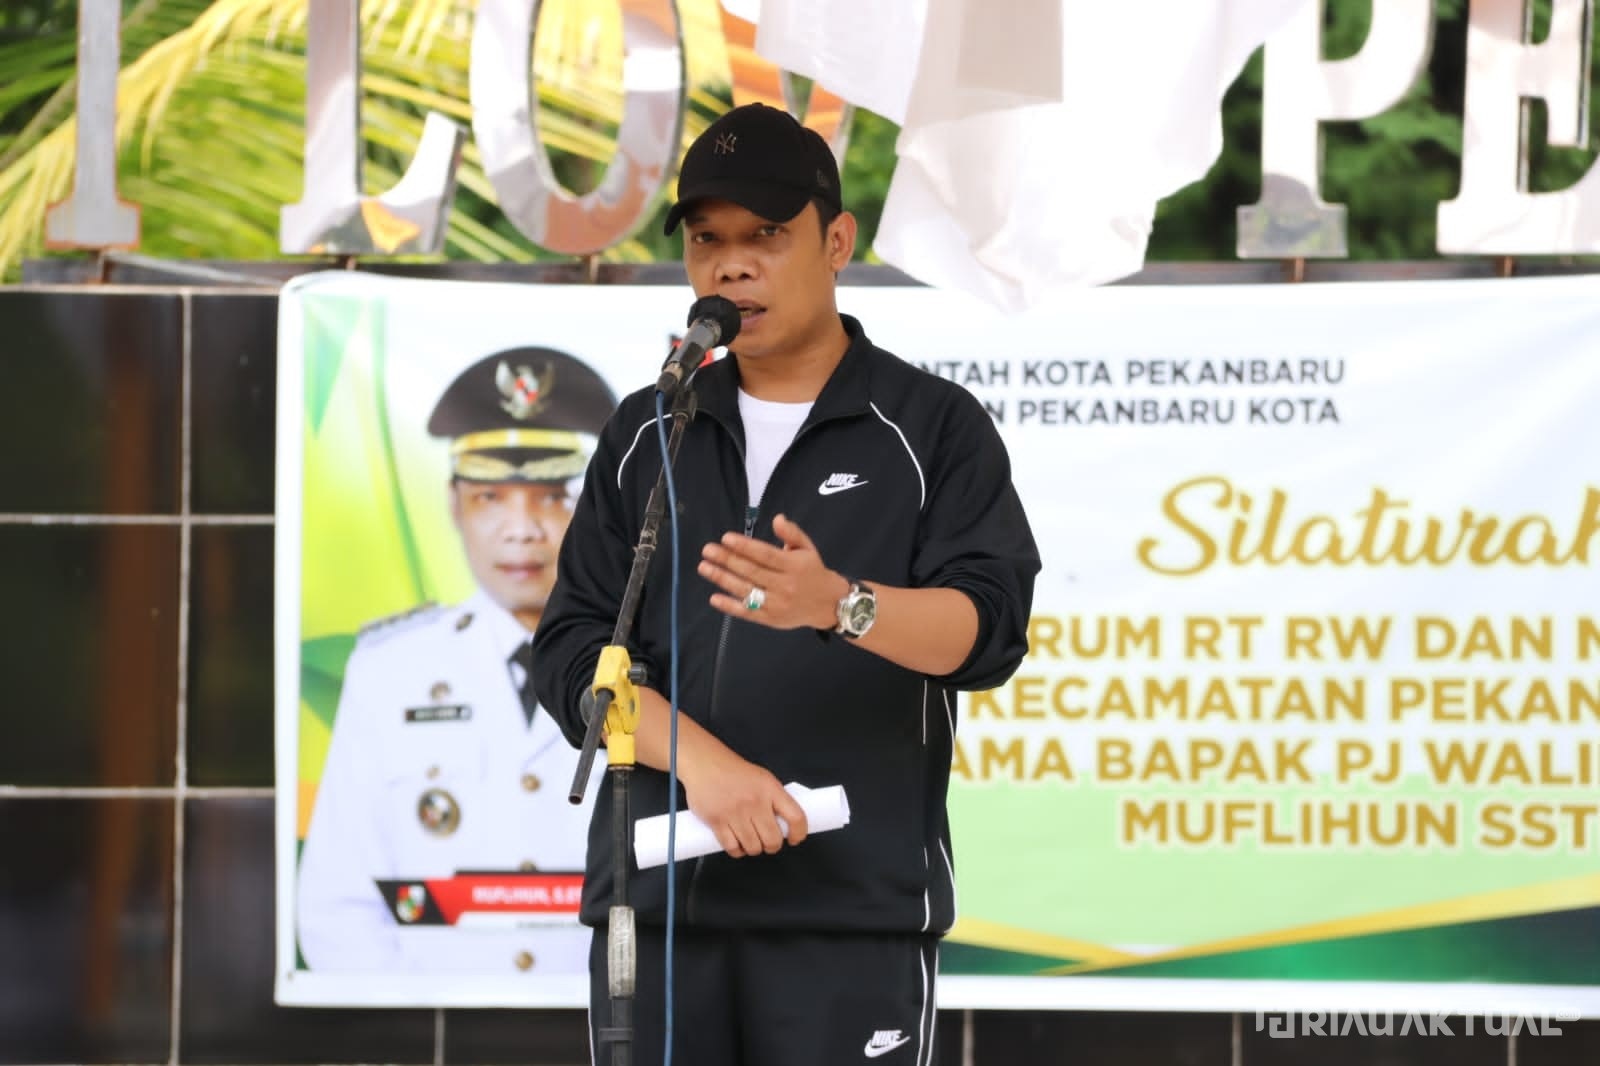 RT/RW Jadi Ujung Tombak, Pj Walikota Pekanbaru Ajak Dukung Program Pemko